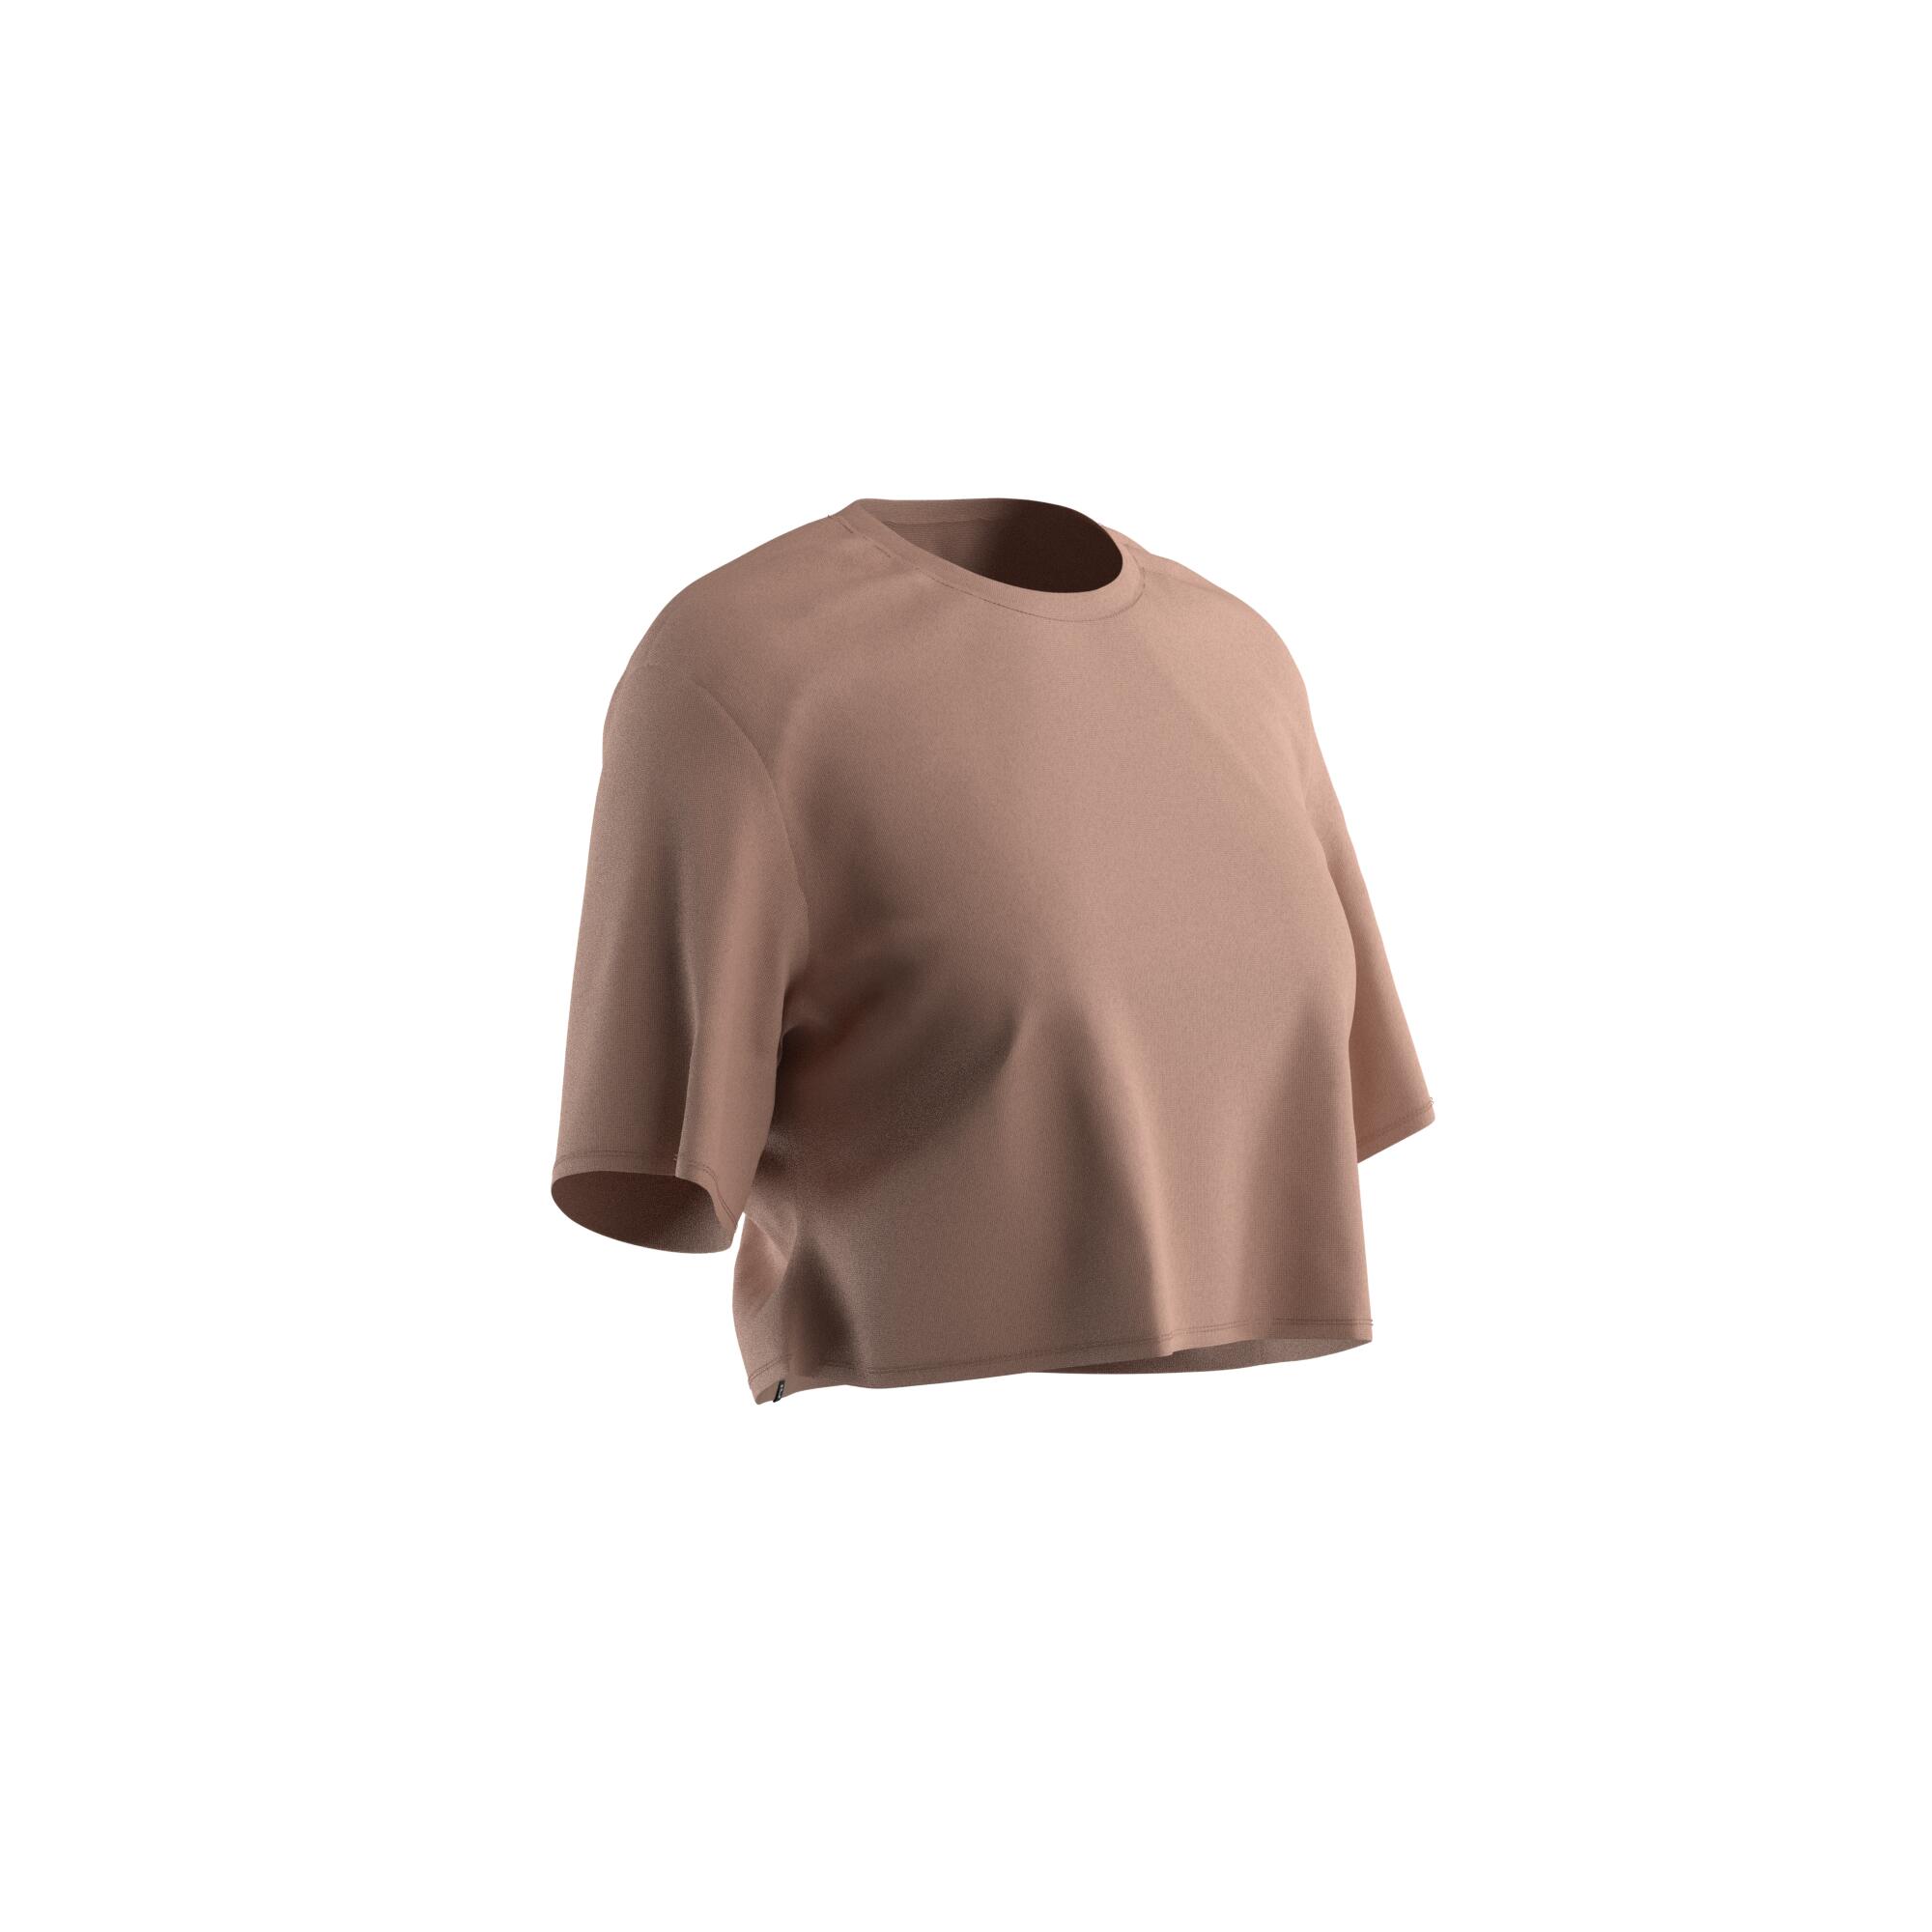 DOMYOS Women's Cropped Fitness T-Shirt 520 - Powder Beige